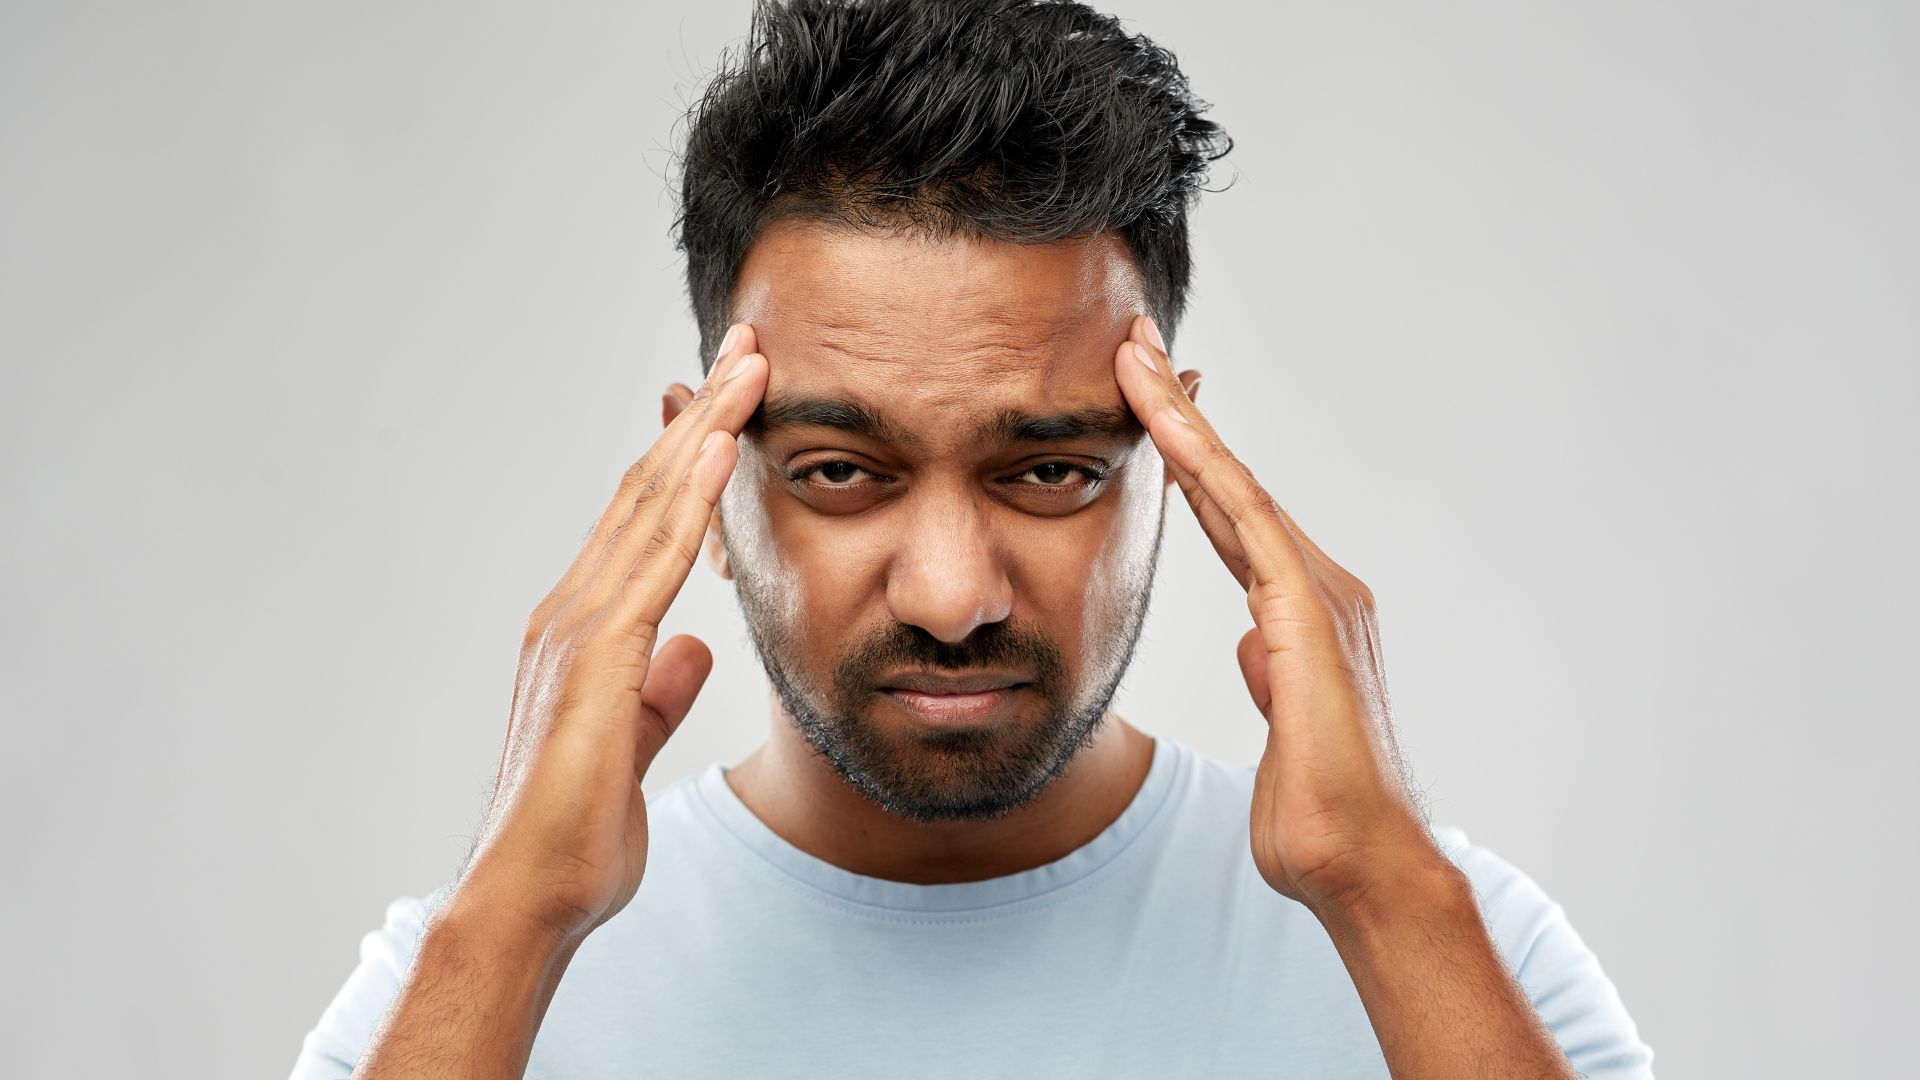 symptoms of side effects of migraine